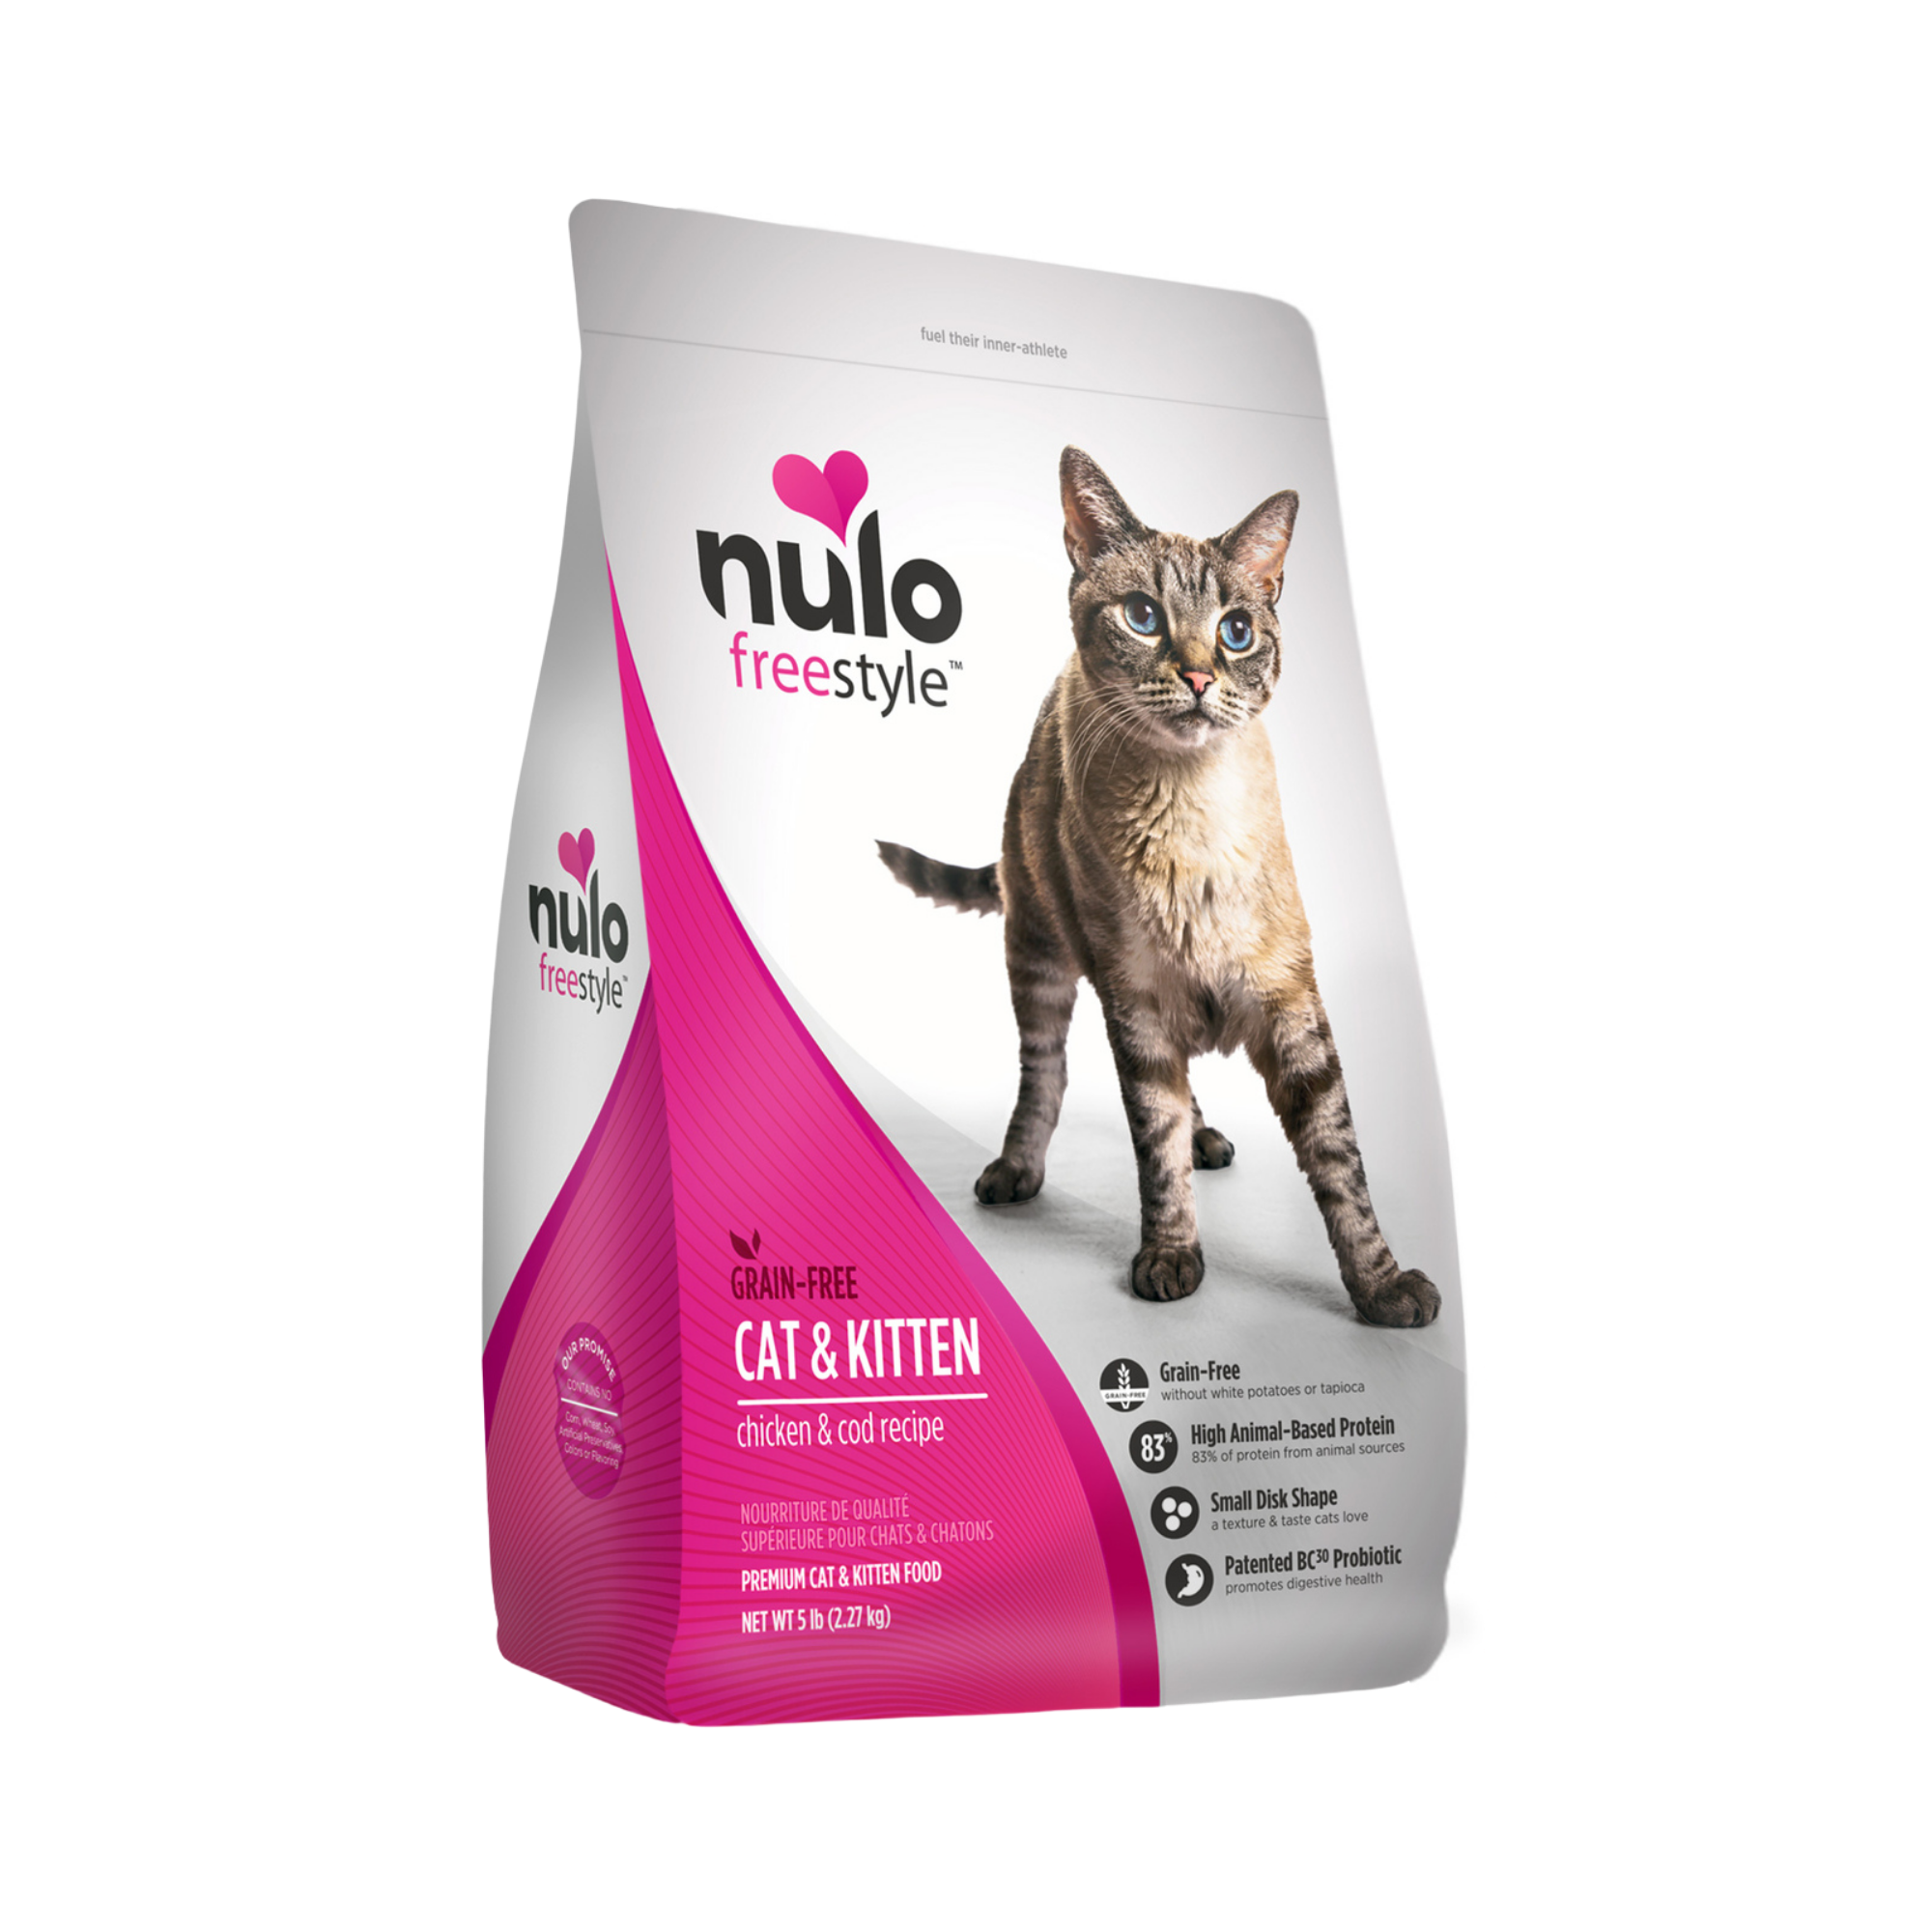 Nulo Freestyle Grain-Free Cat & Kitten Chicken & Cod Recipe Dry Cat Food - Mutts & Co.